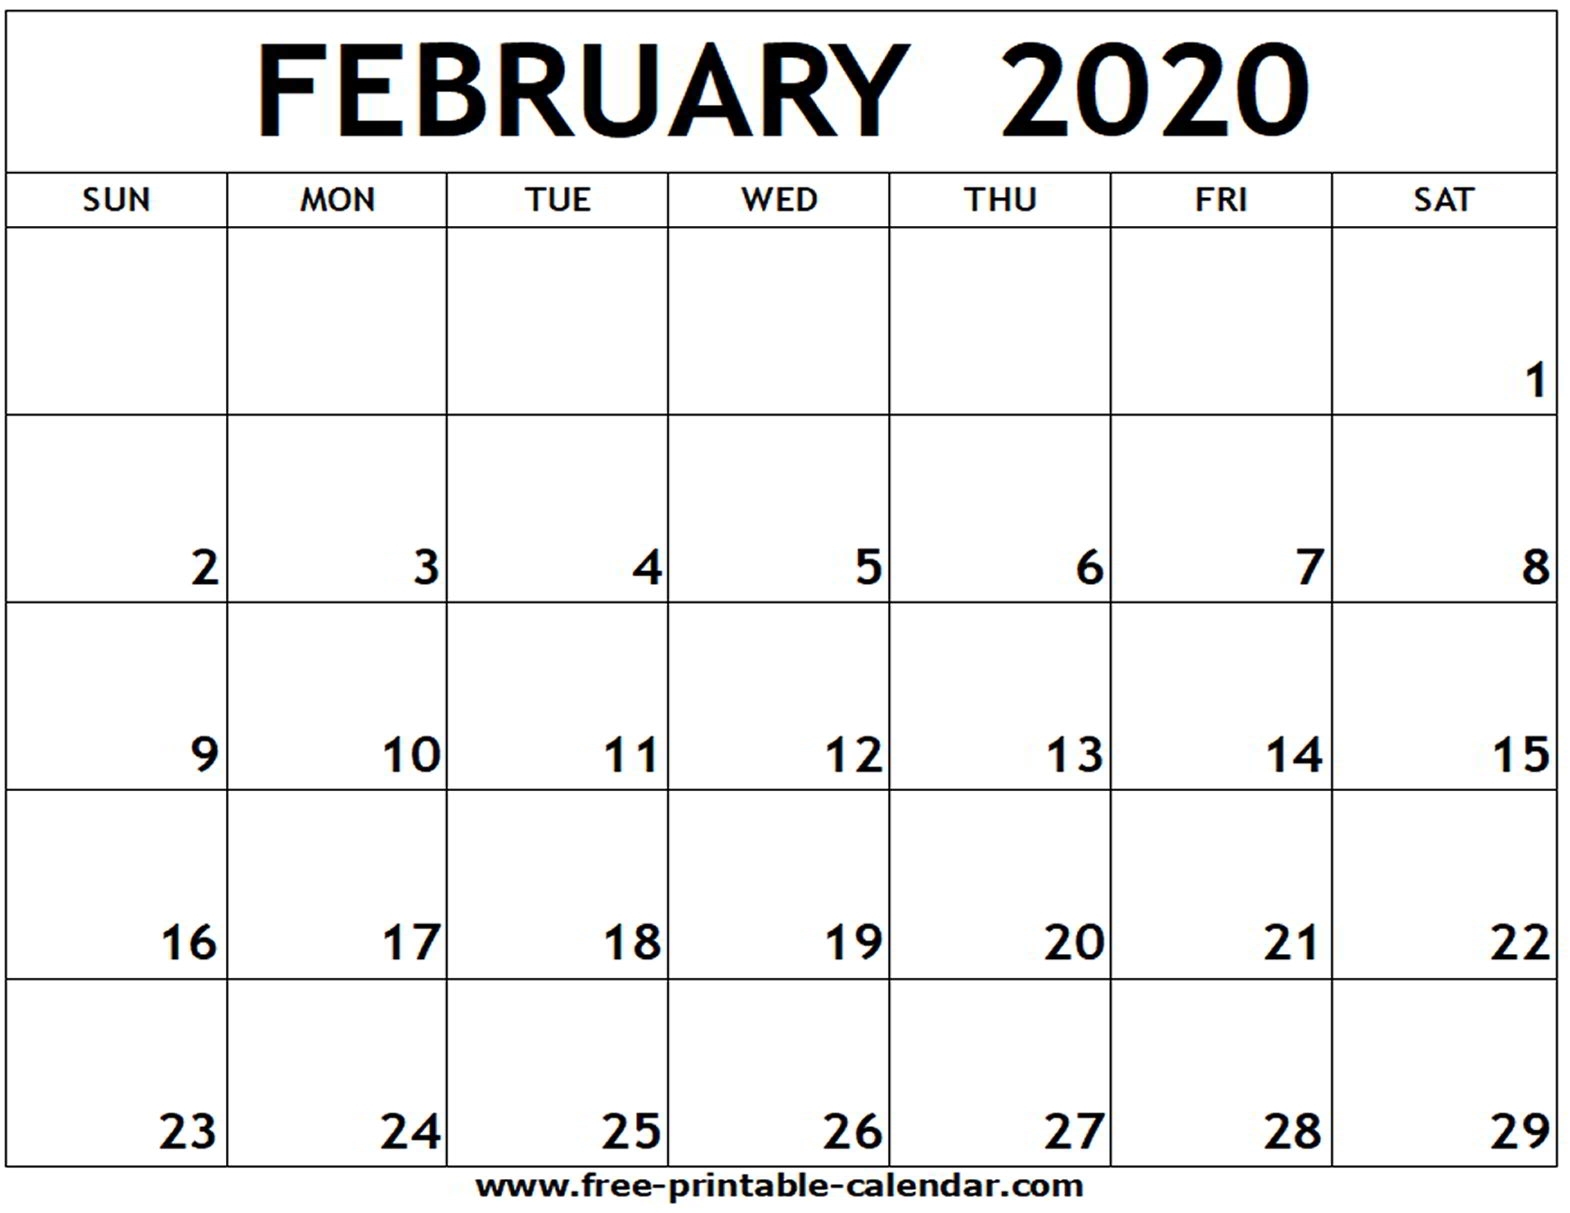 February 2020 Printable Calendar - Free-Printable-Calendar with regard to Printable Fill In 2020 Calndar